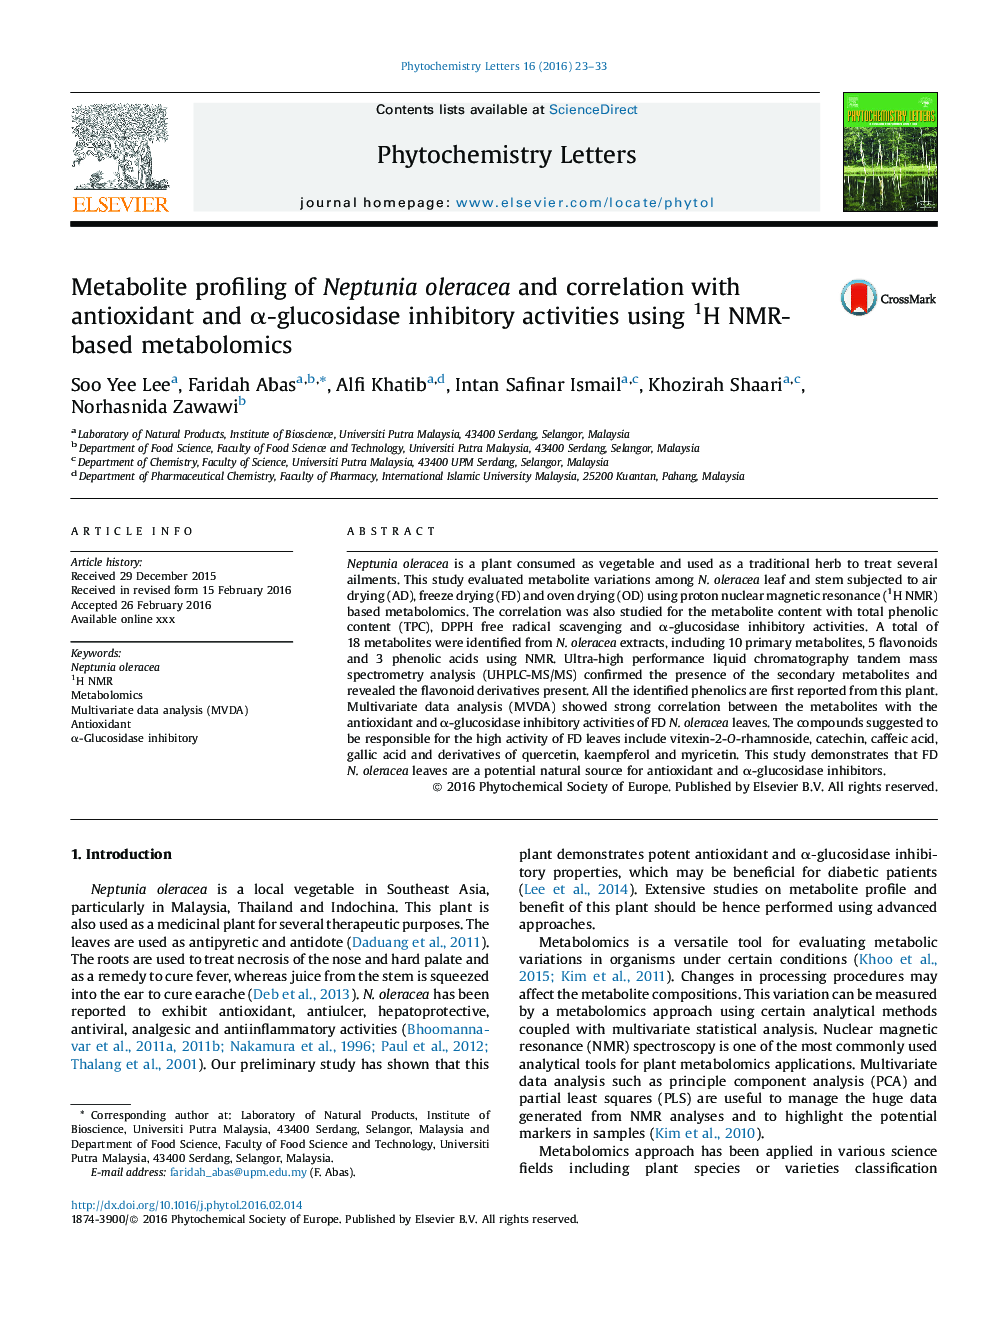 Metabolite profiling of Neptunia oleracea and correlation with antioxidant and Î±-glucosidase inhibitory activities using 1H NMR-based metabolomics